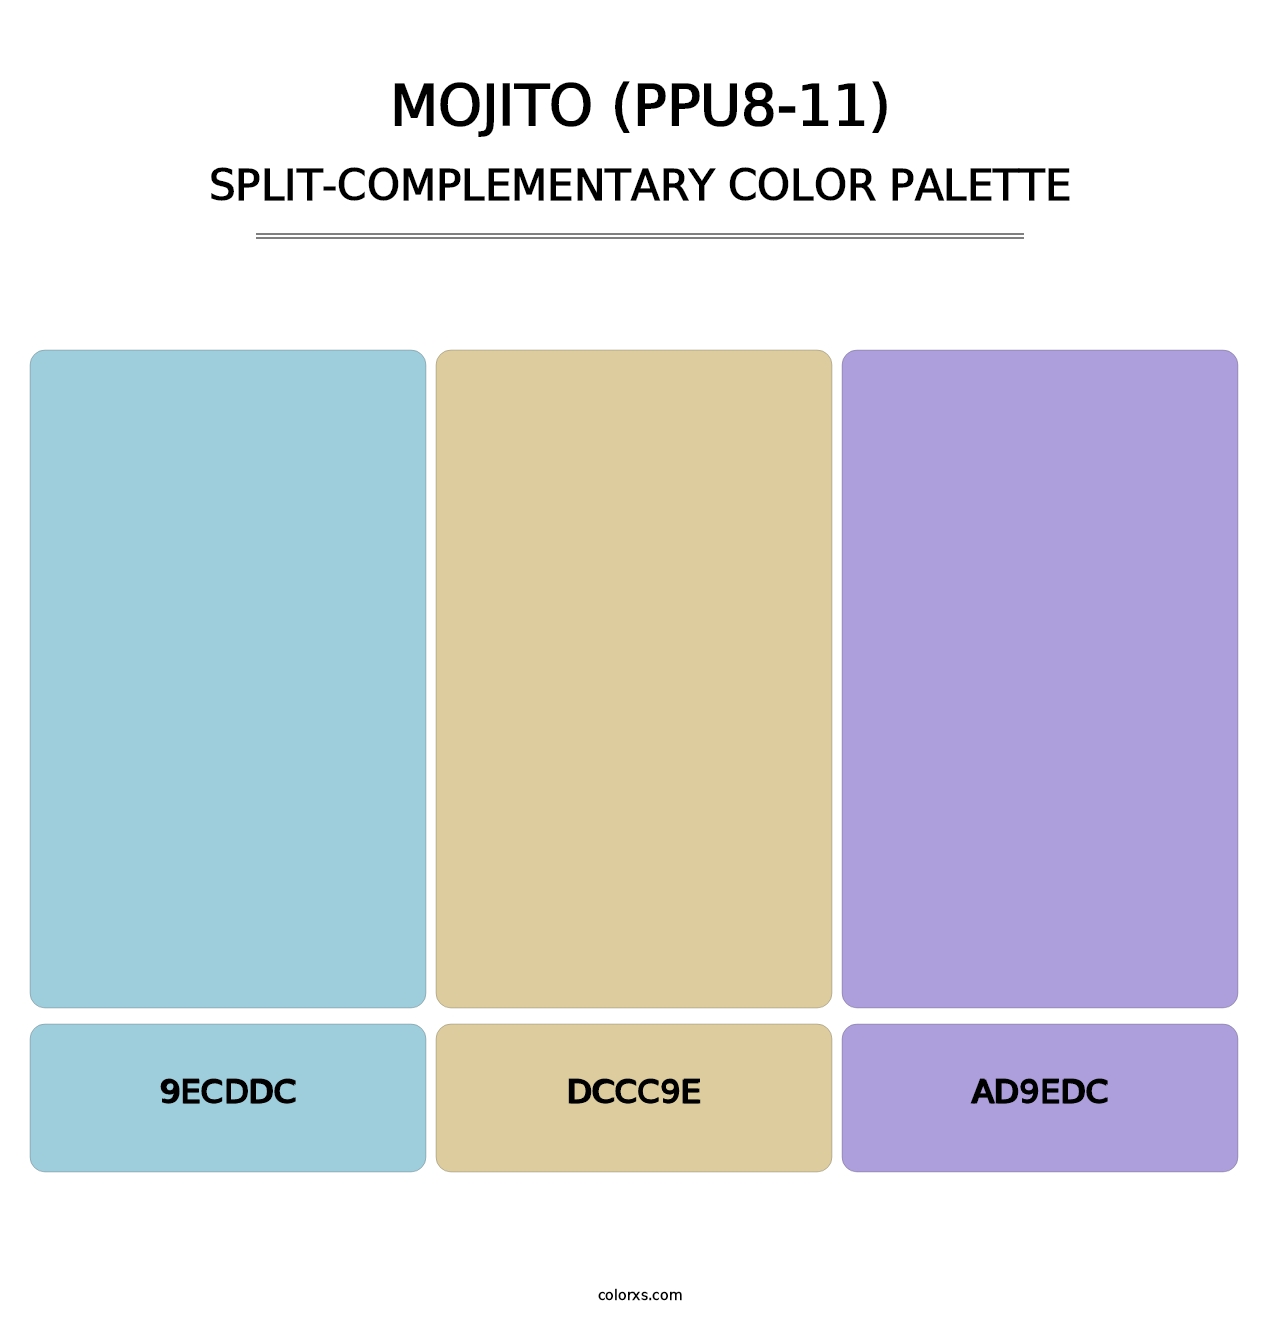 Mojito (PPU8-11) - Split-Complementary Color Palette